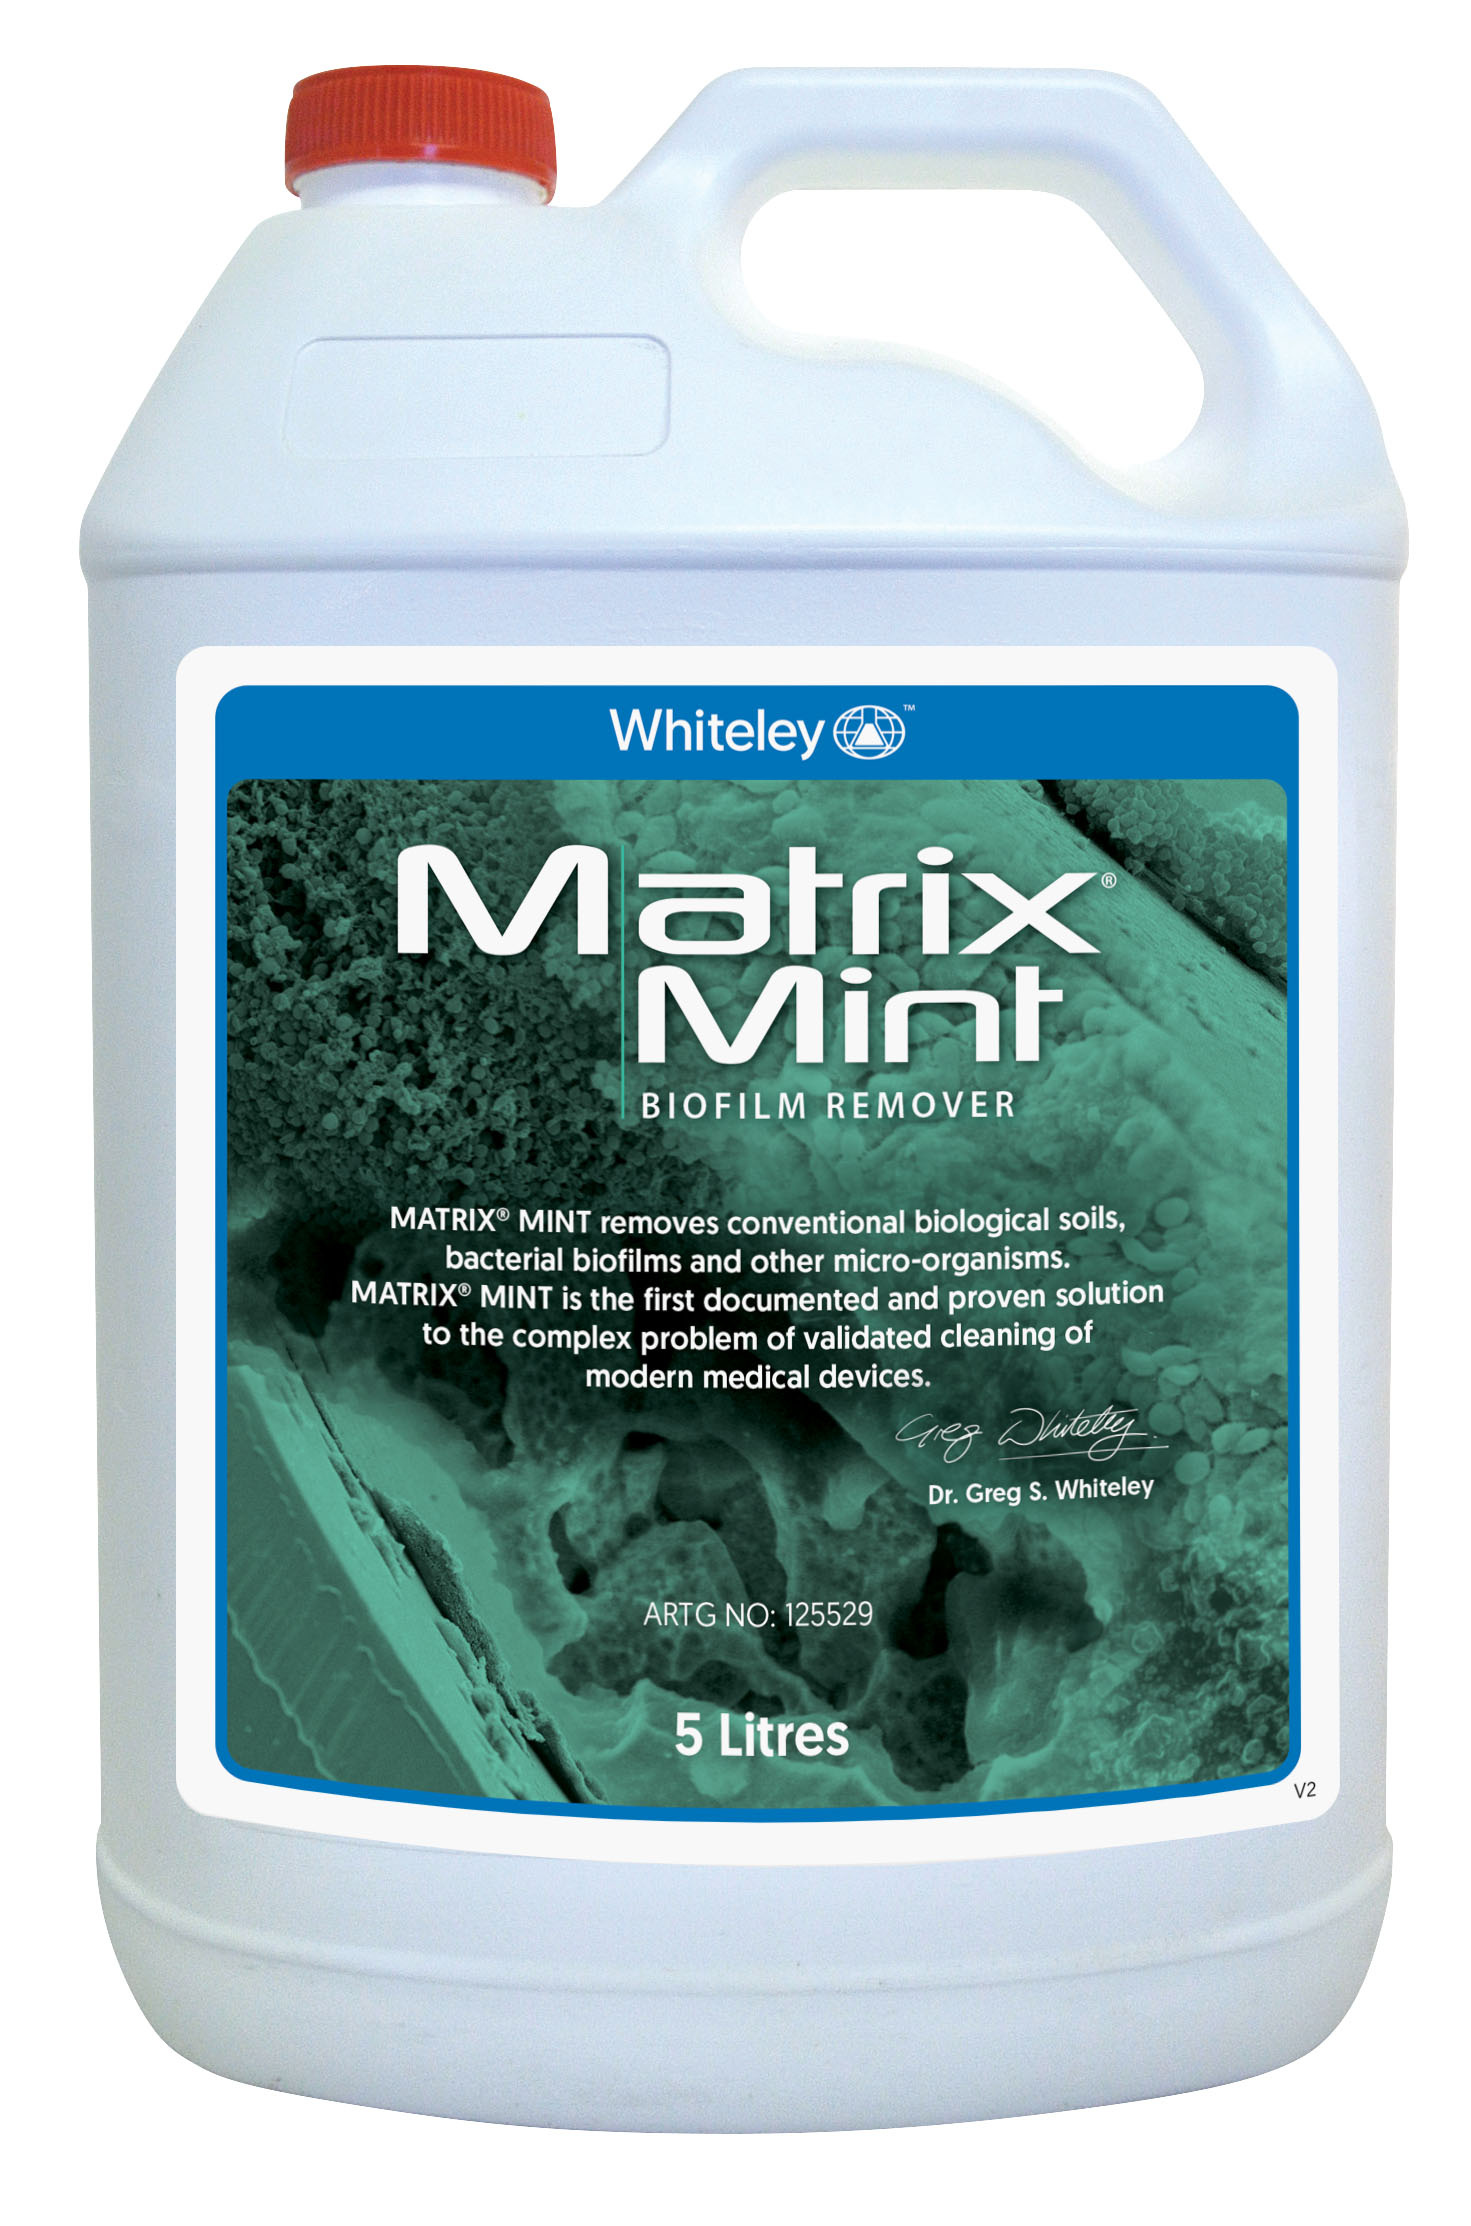 Whiteley Matrix Mint Biofilm Remover 5 Litre image 0